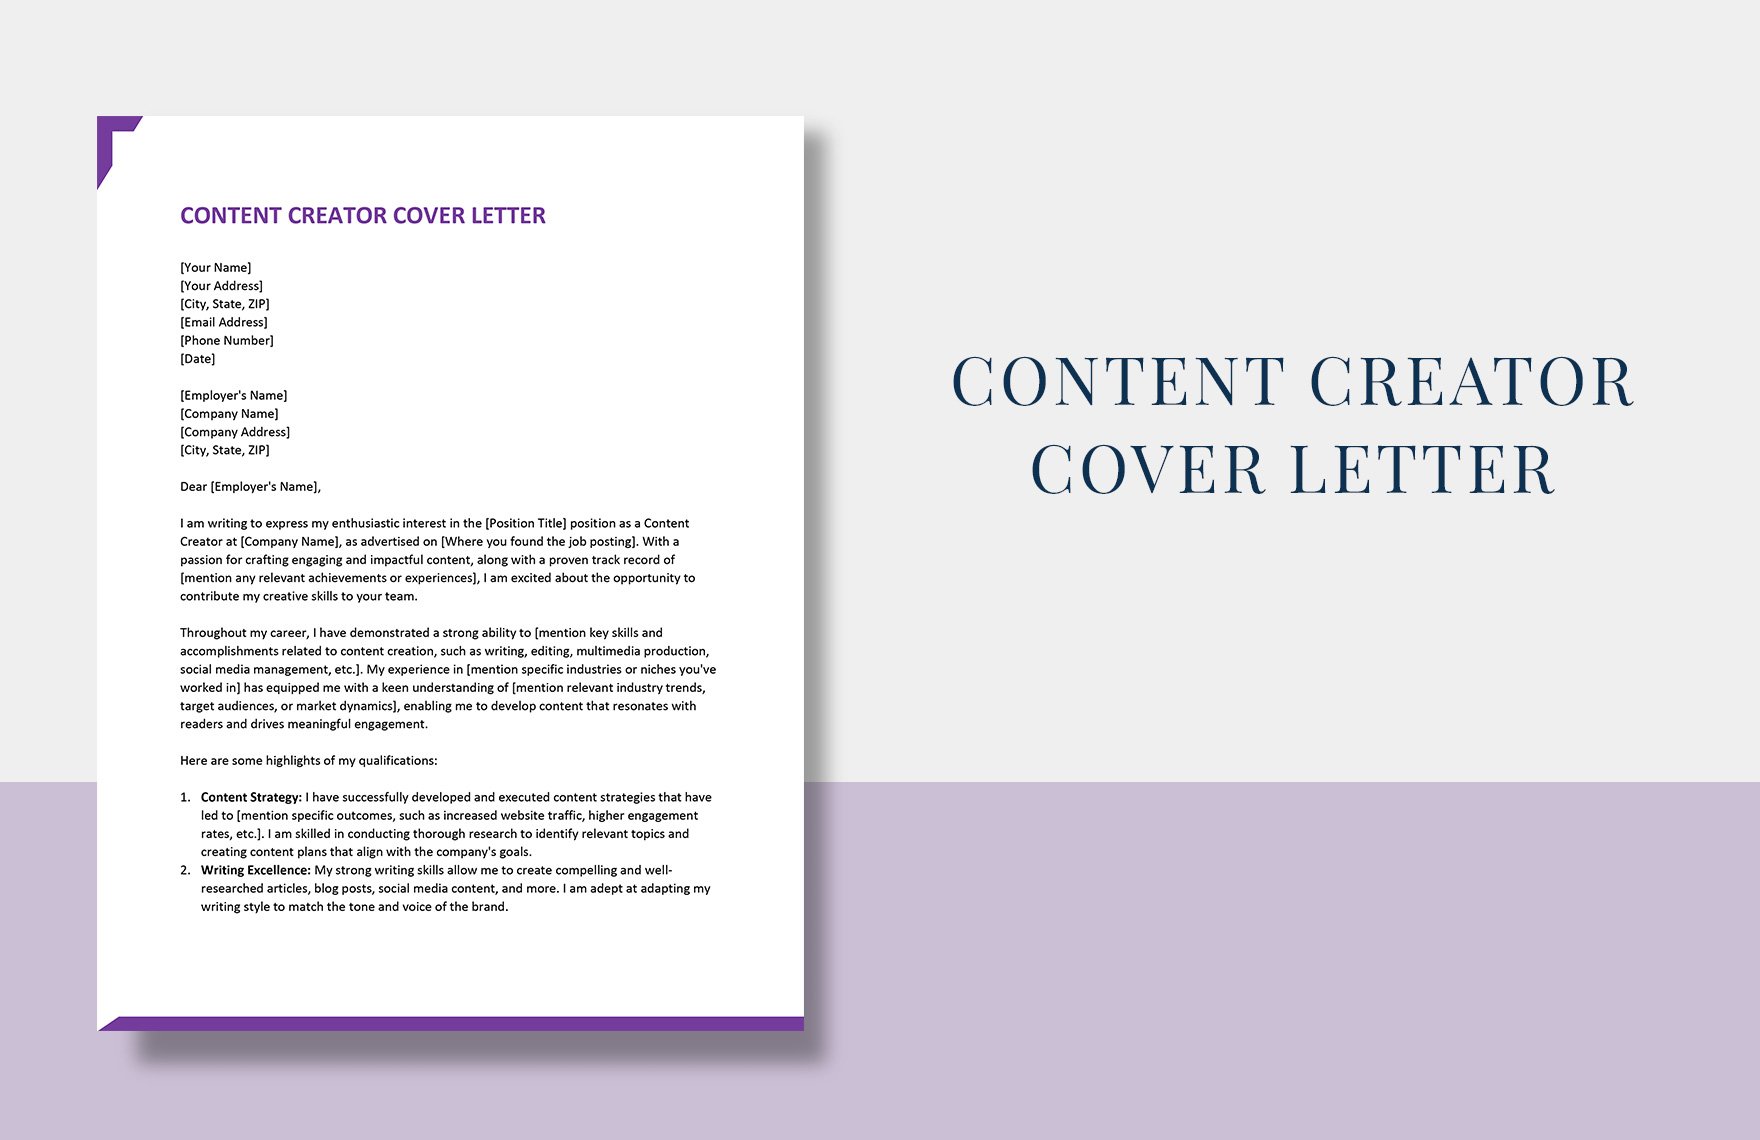 Content Creator Cover Letter